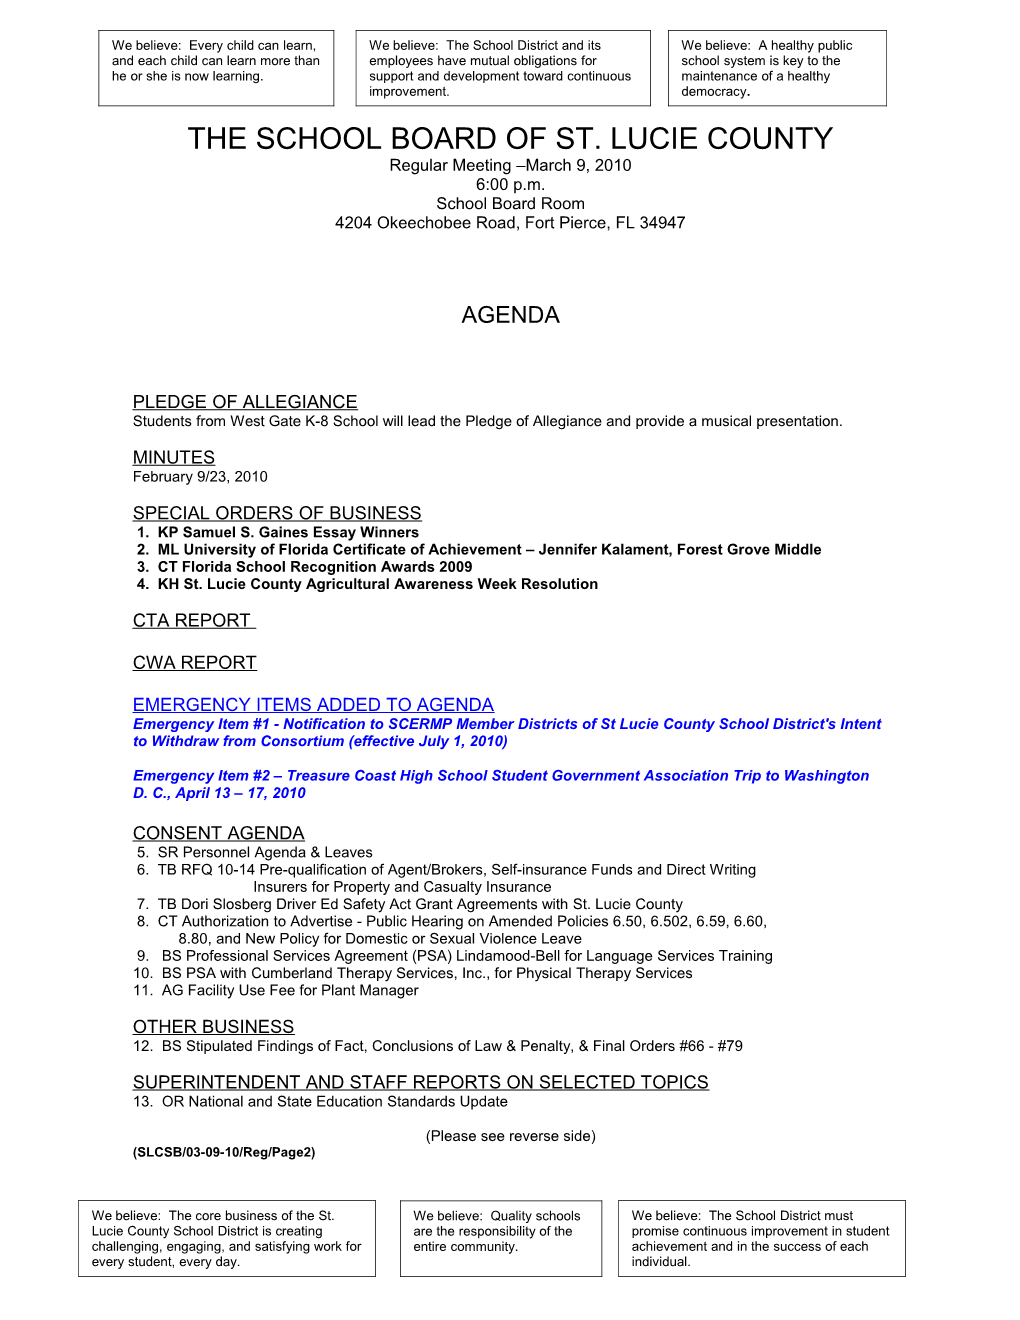 03-09-10 SLCSB Regular Meeting Agenda